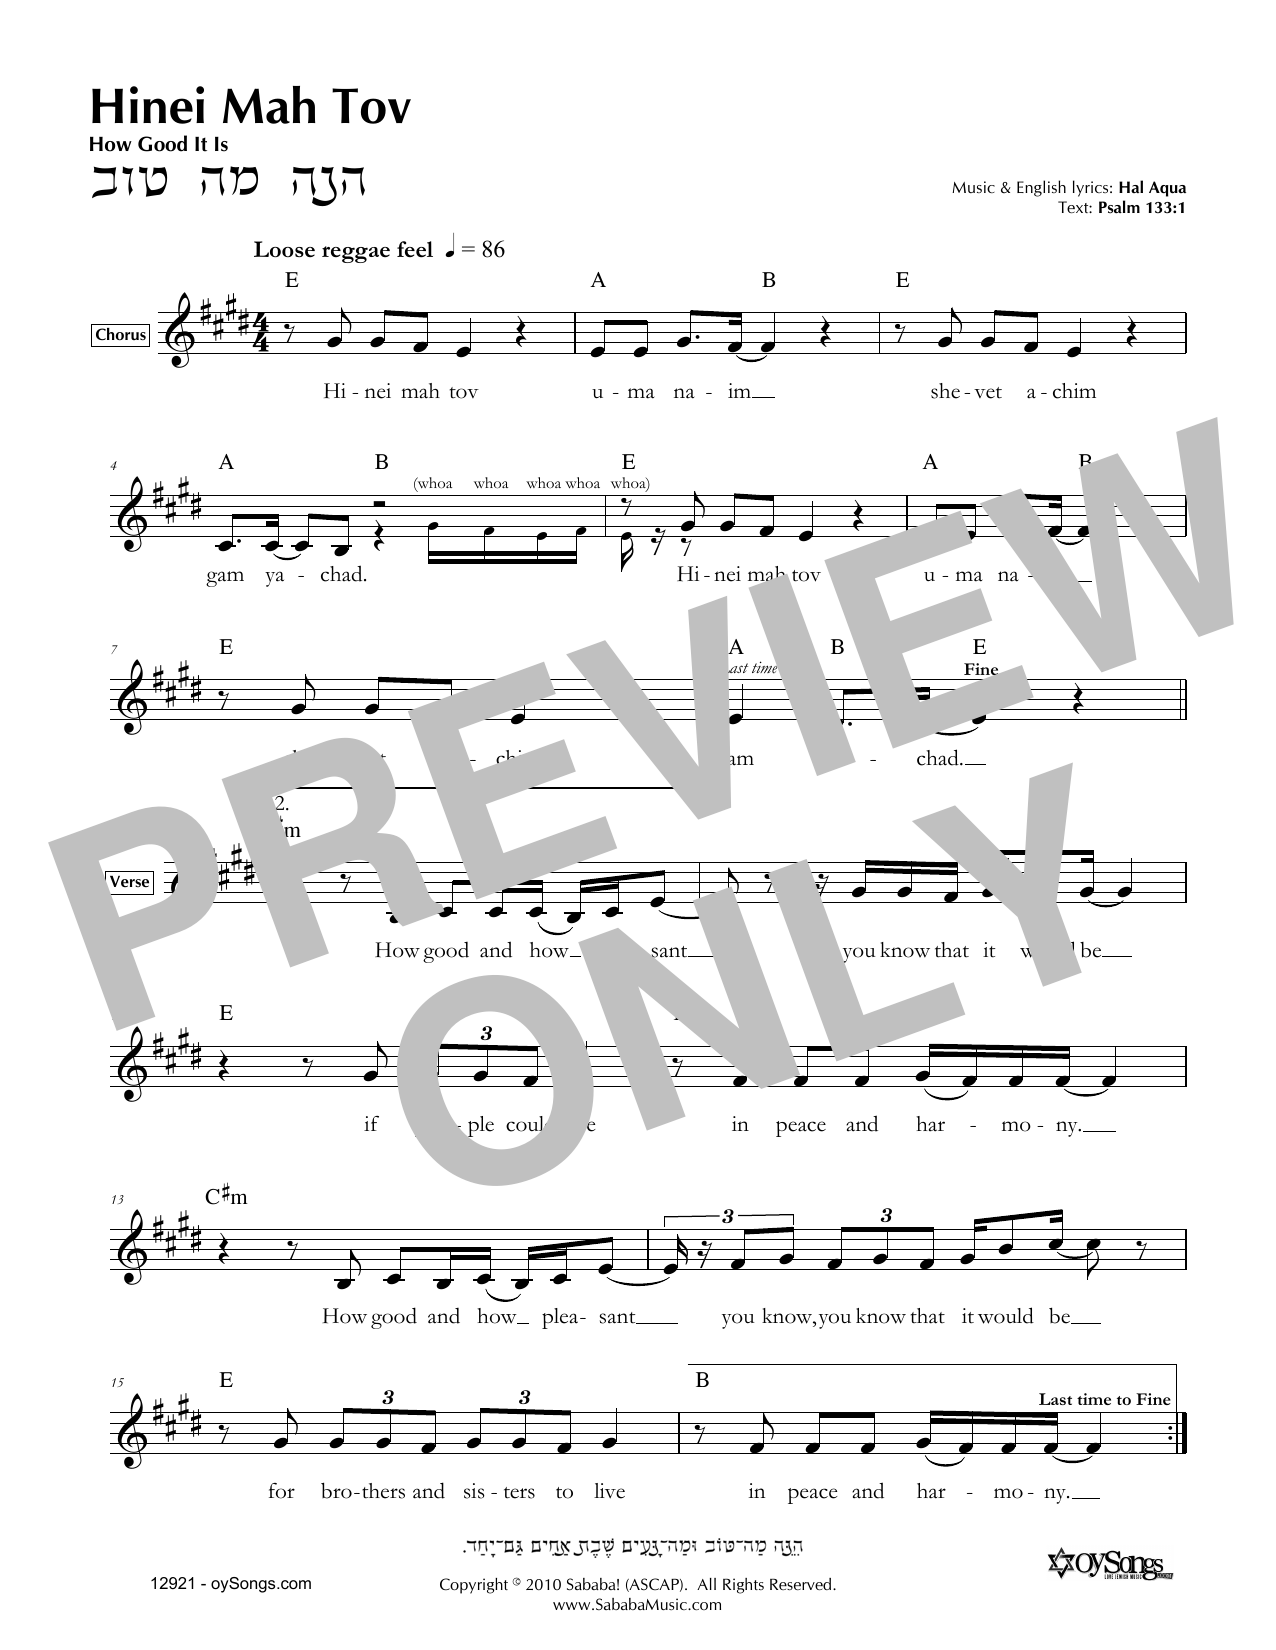 Hal Aqua Hinei Mah Tov Sheet Music Notes & Chords for Melody Line, Lyrics & Chords - Download or Print PDF